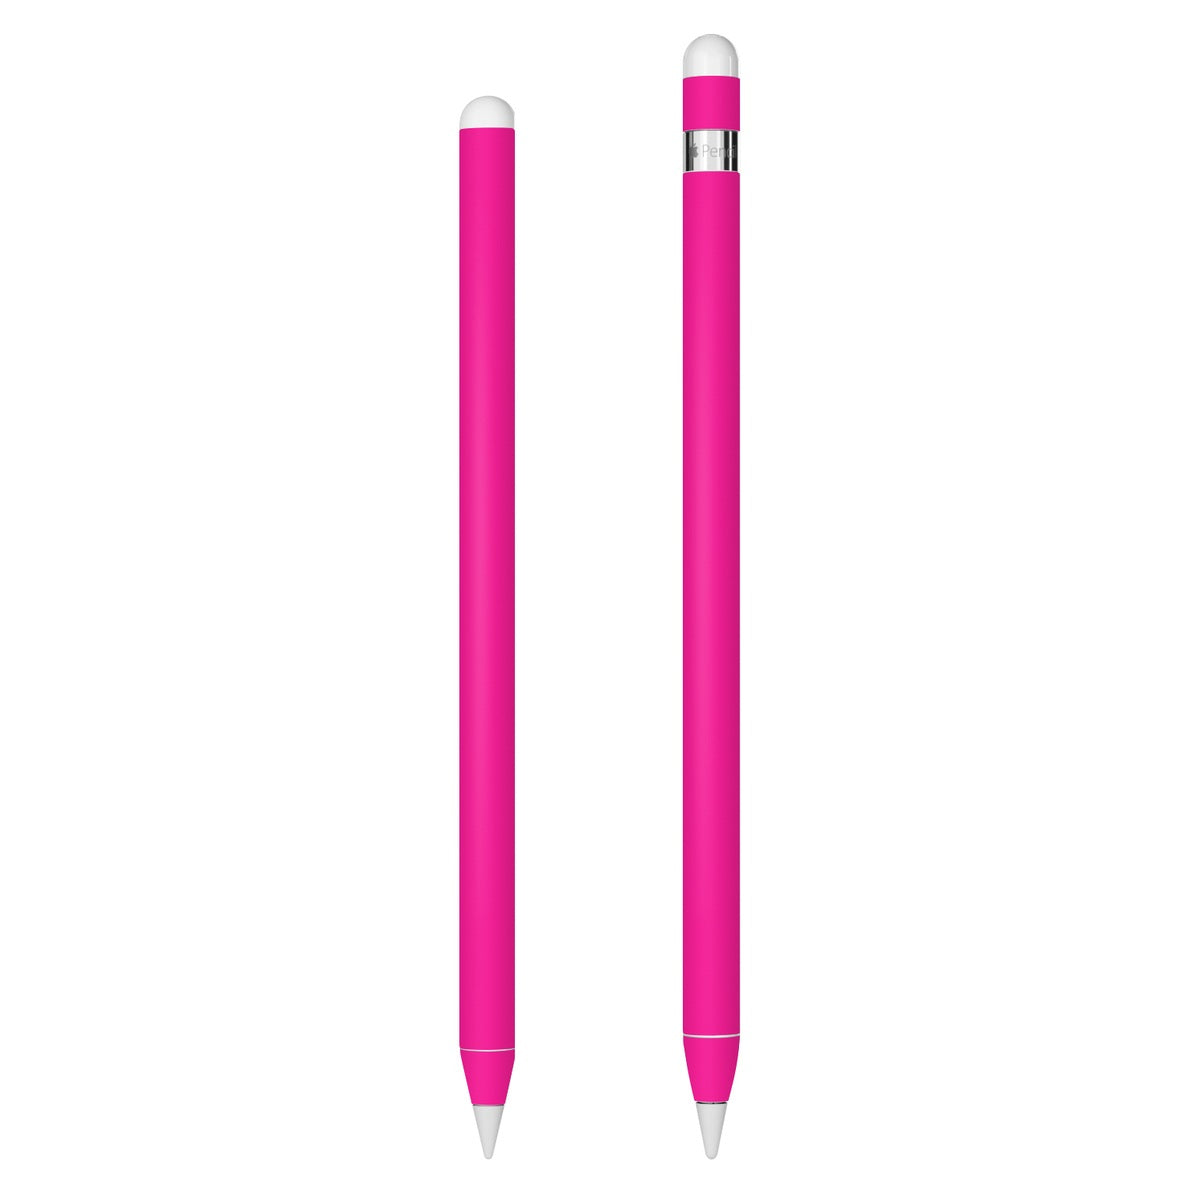 Solid State Malibu Pink - Apple Pencil Skin